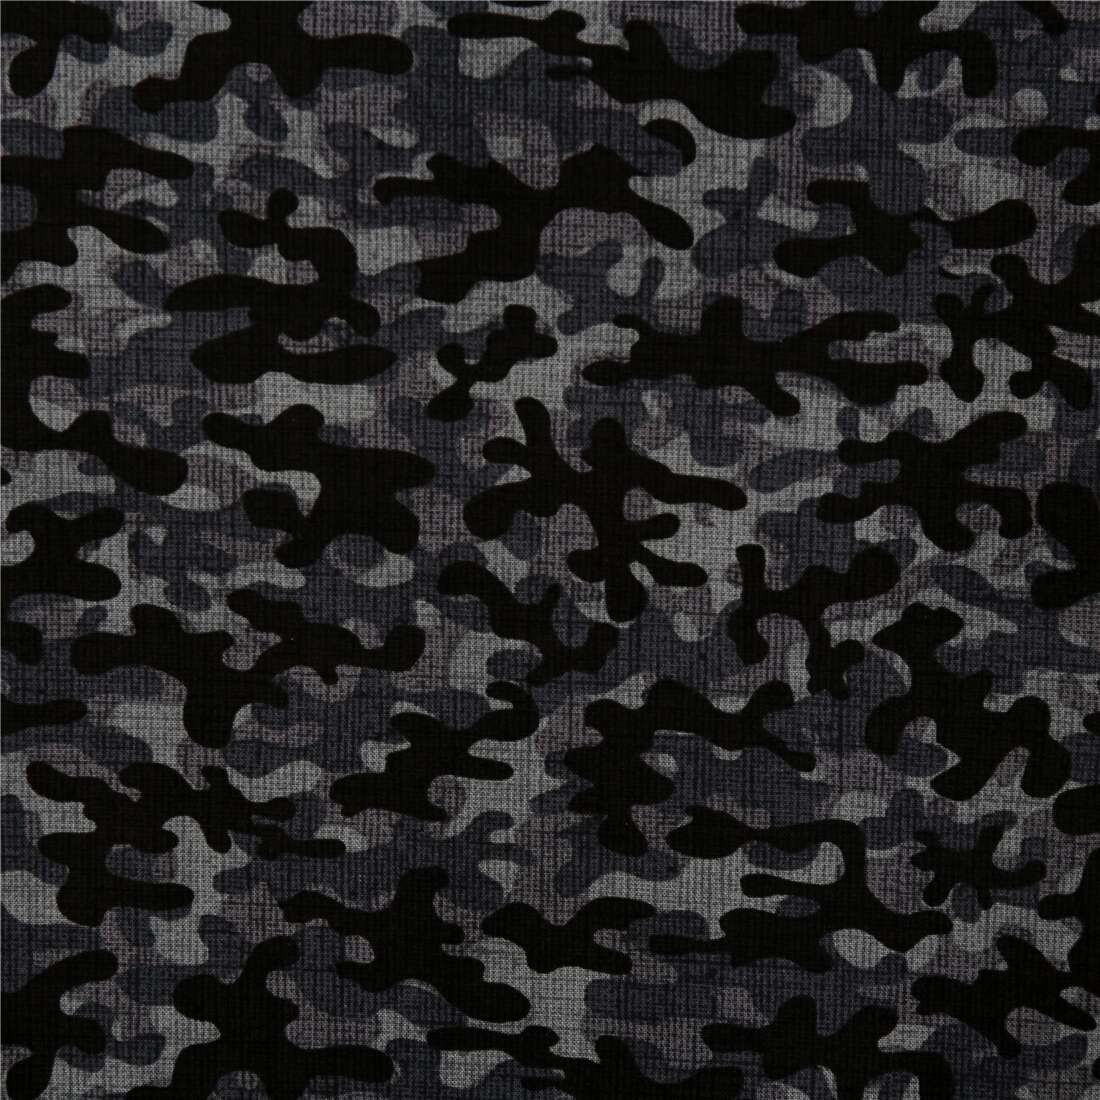 Camo Spot Black Grey Camouflage Fabric USA Timeless Treasures 245157 1 